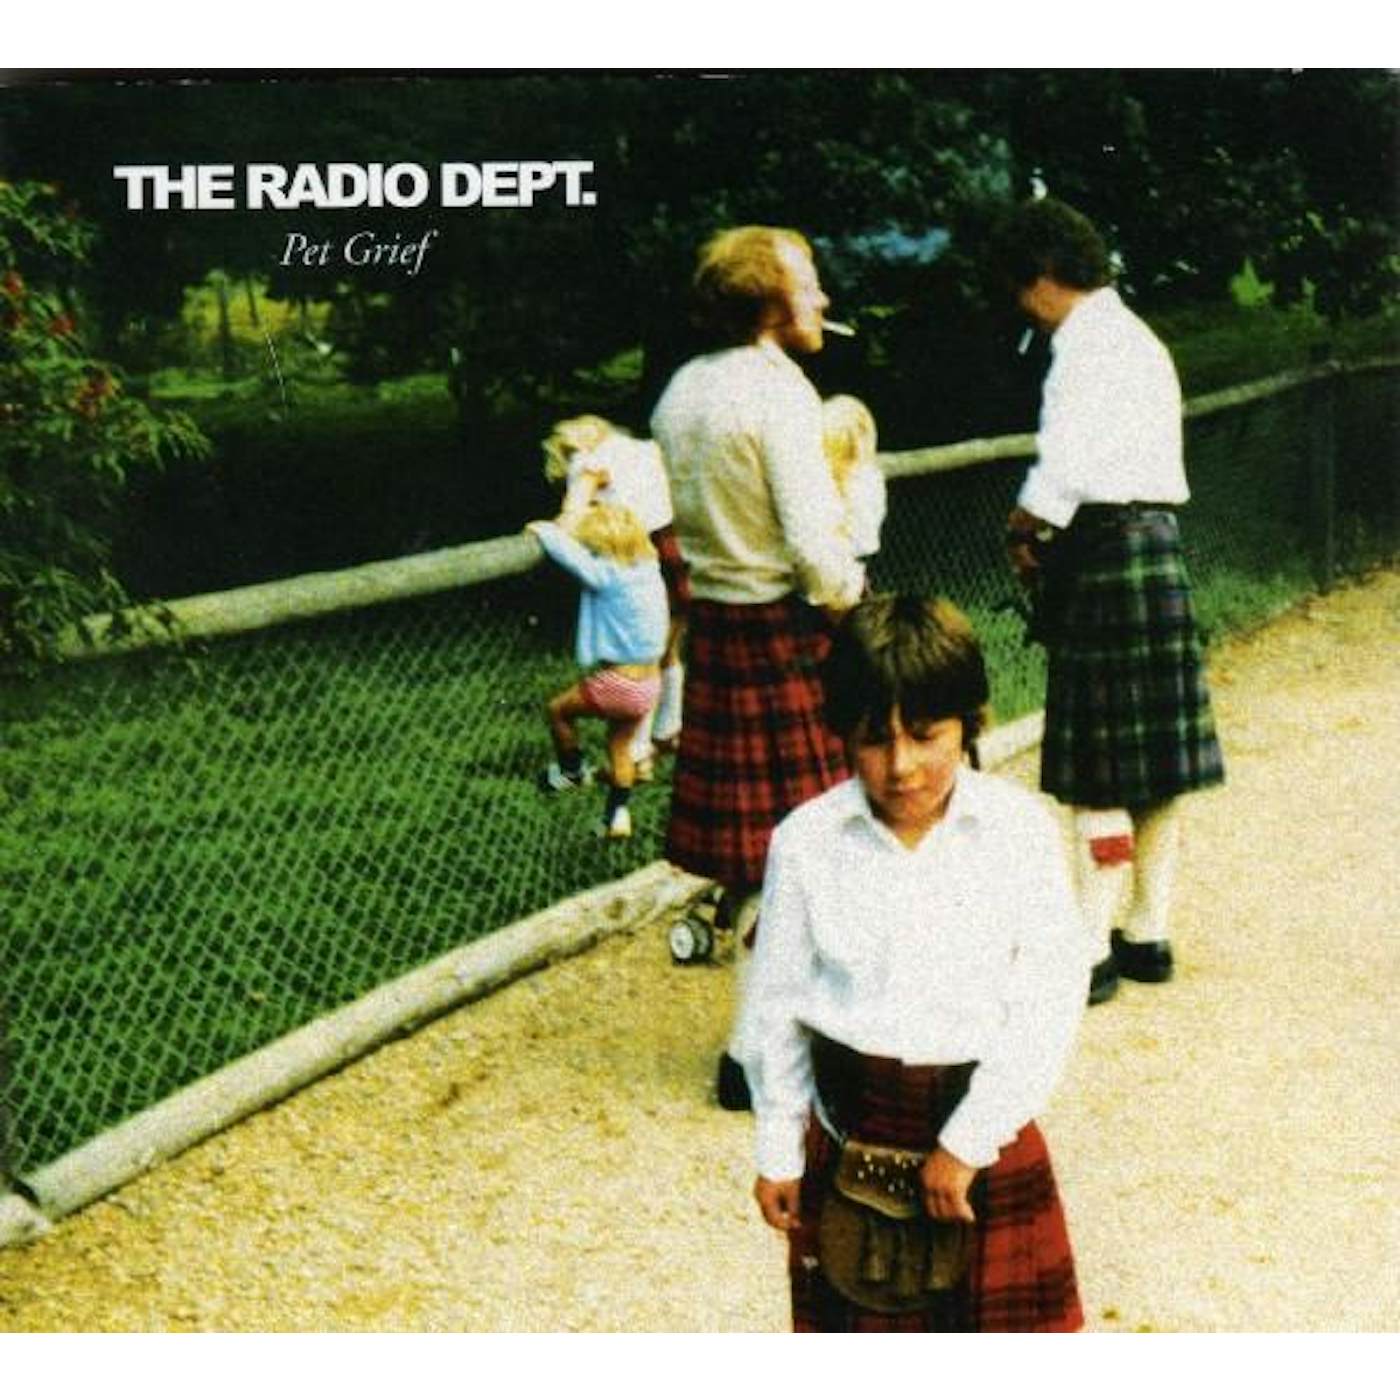 The Radio Dept. Pet Grief Vinyl Record